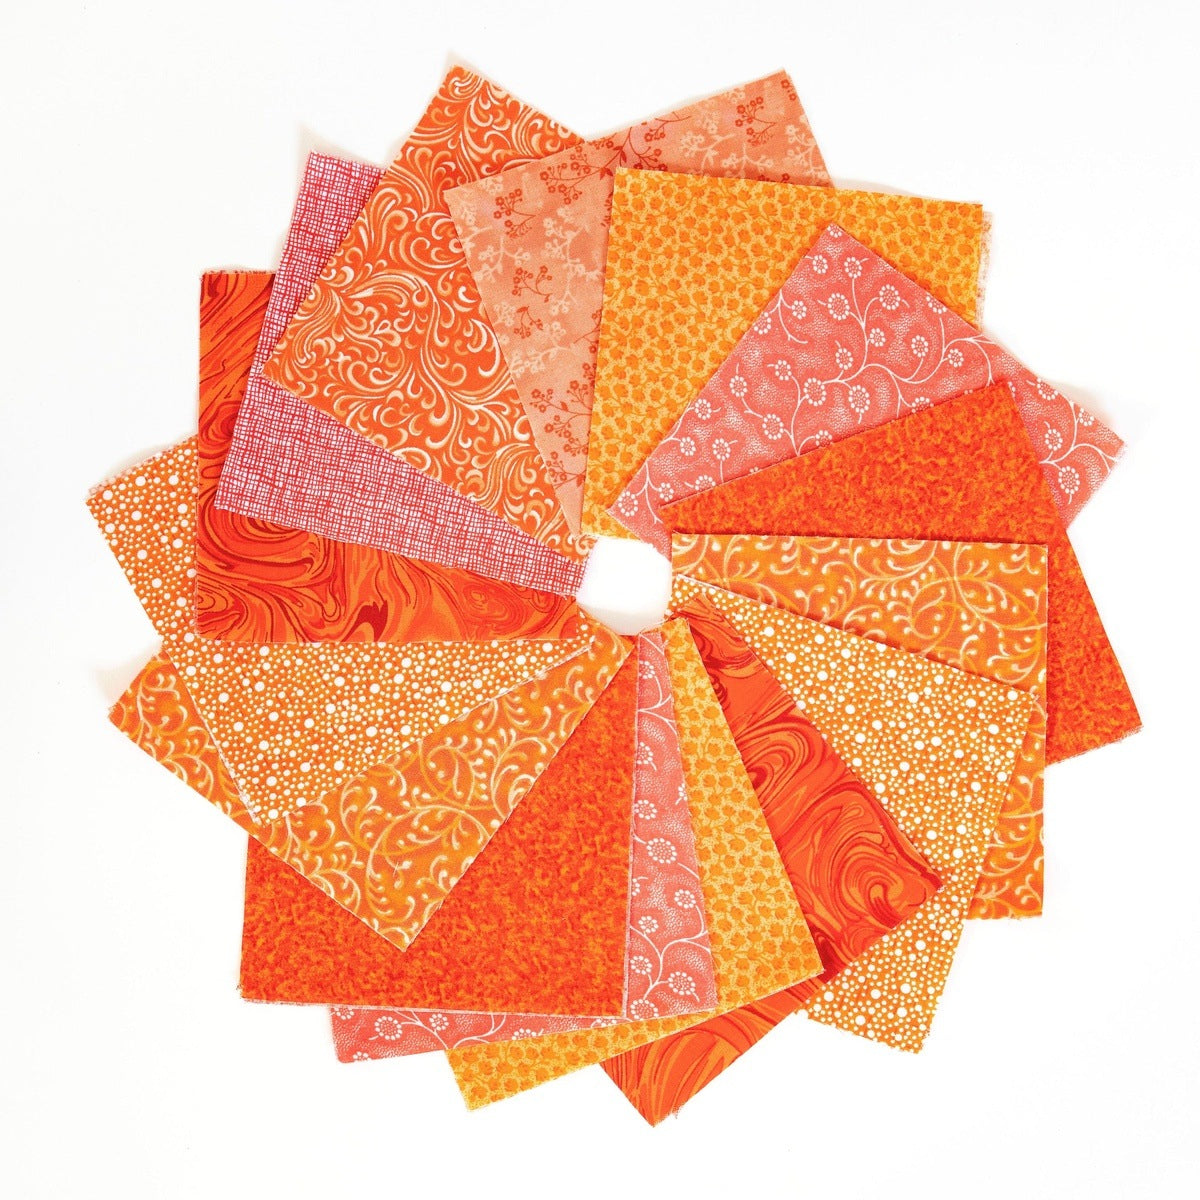 It's All Orange 90-piece pre-cut charm pack 5" squares 100% cotton fabric quilt various orange tone-on-tone